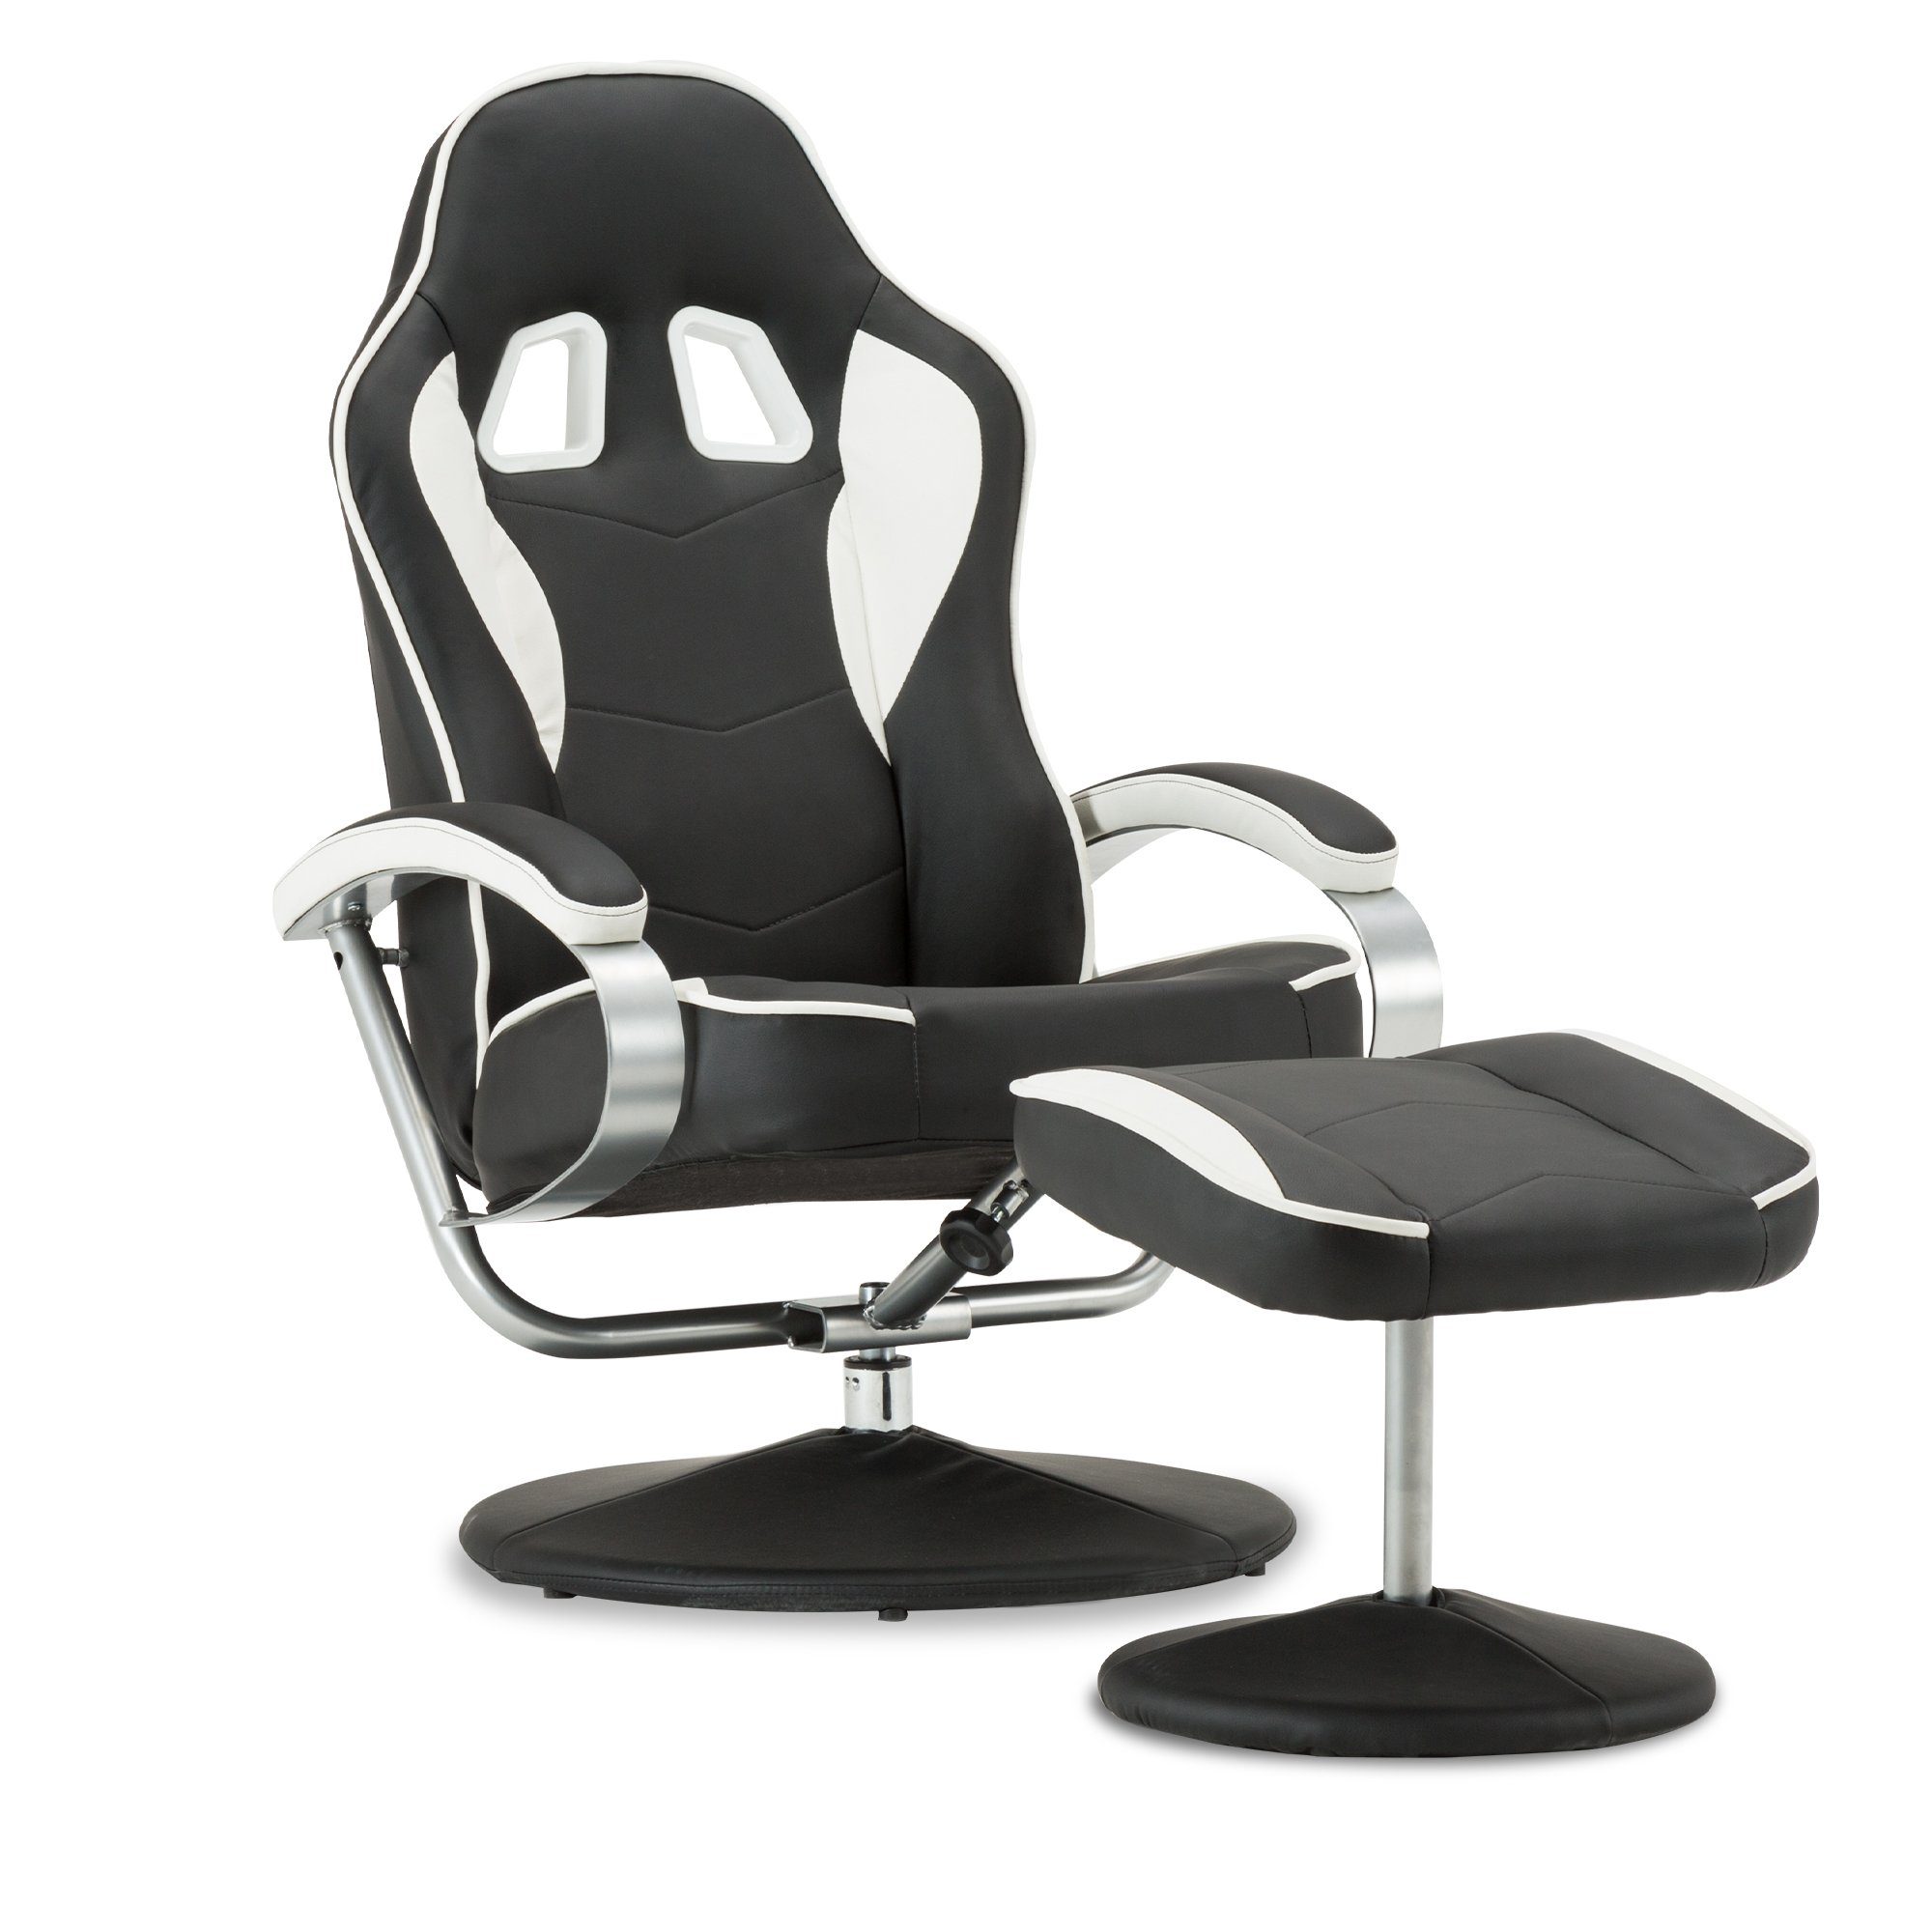 MCombo TV-Sessel MCombo Racing Gaming Stuhl mit Hocker 9012, moderner Fernsehsessel TV-Sessel für Wohnzimmer